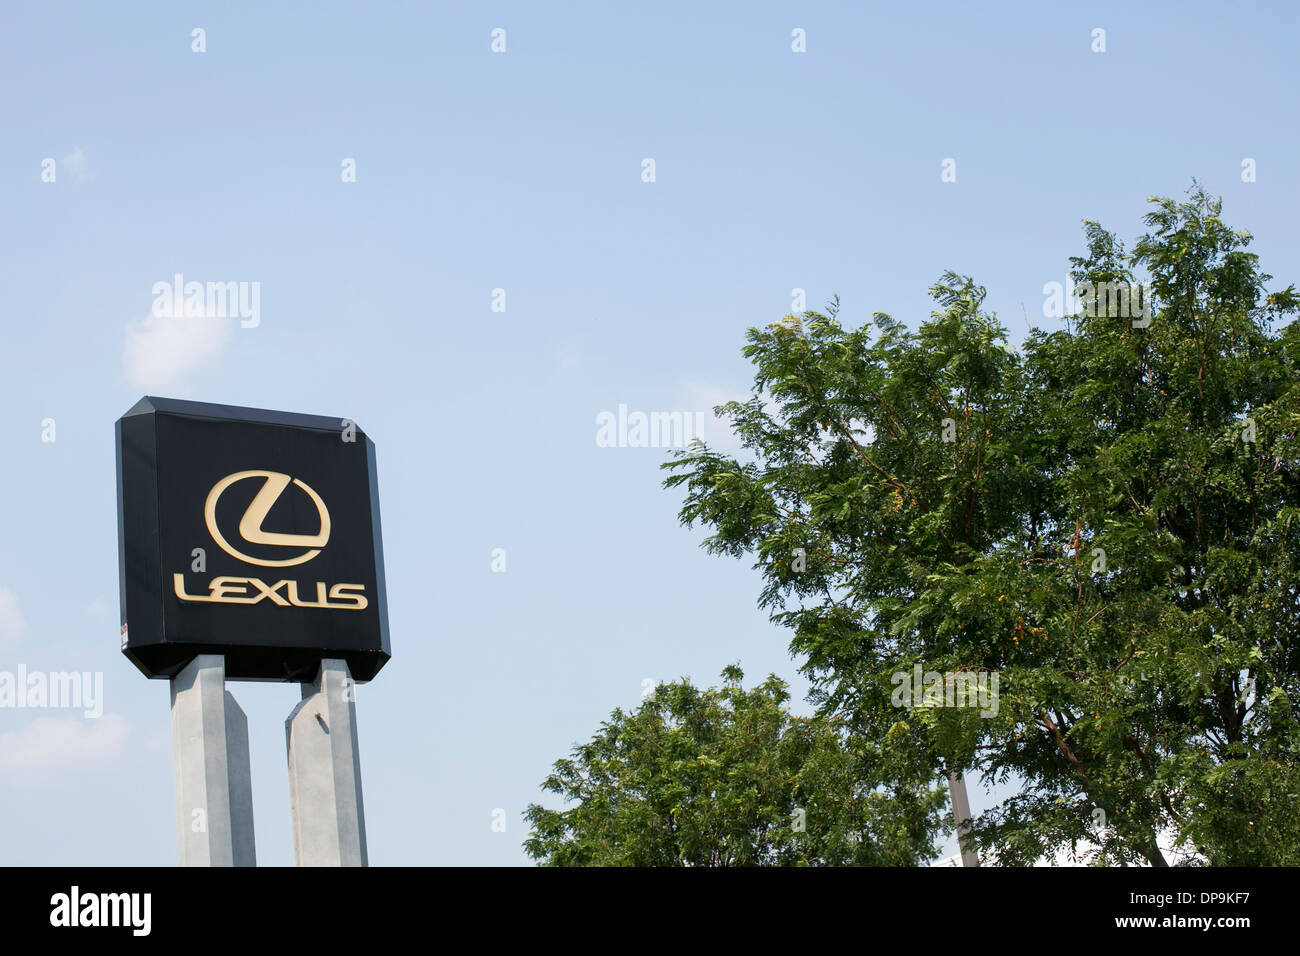 A Lexus dealer lot in suburban Maryland.  Stock Photo